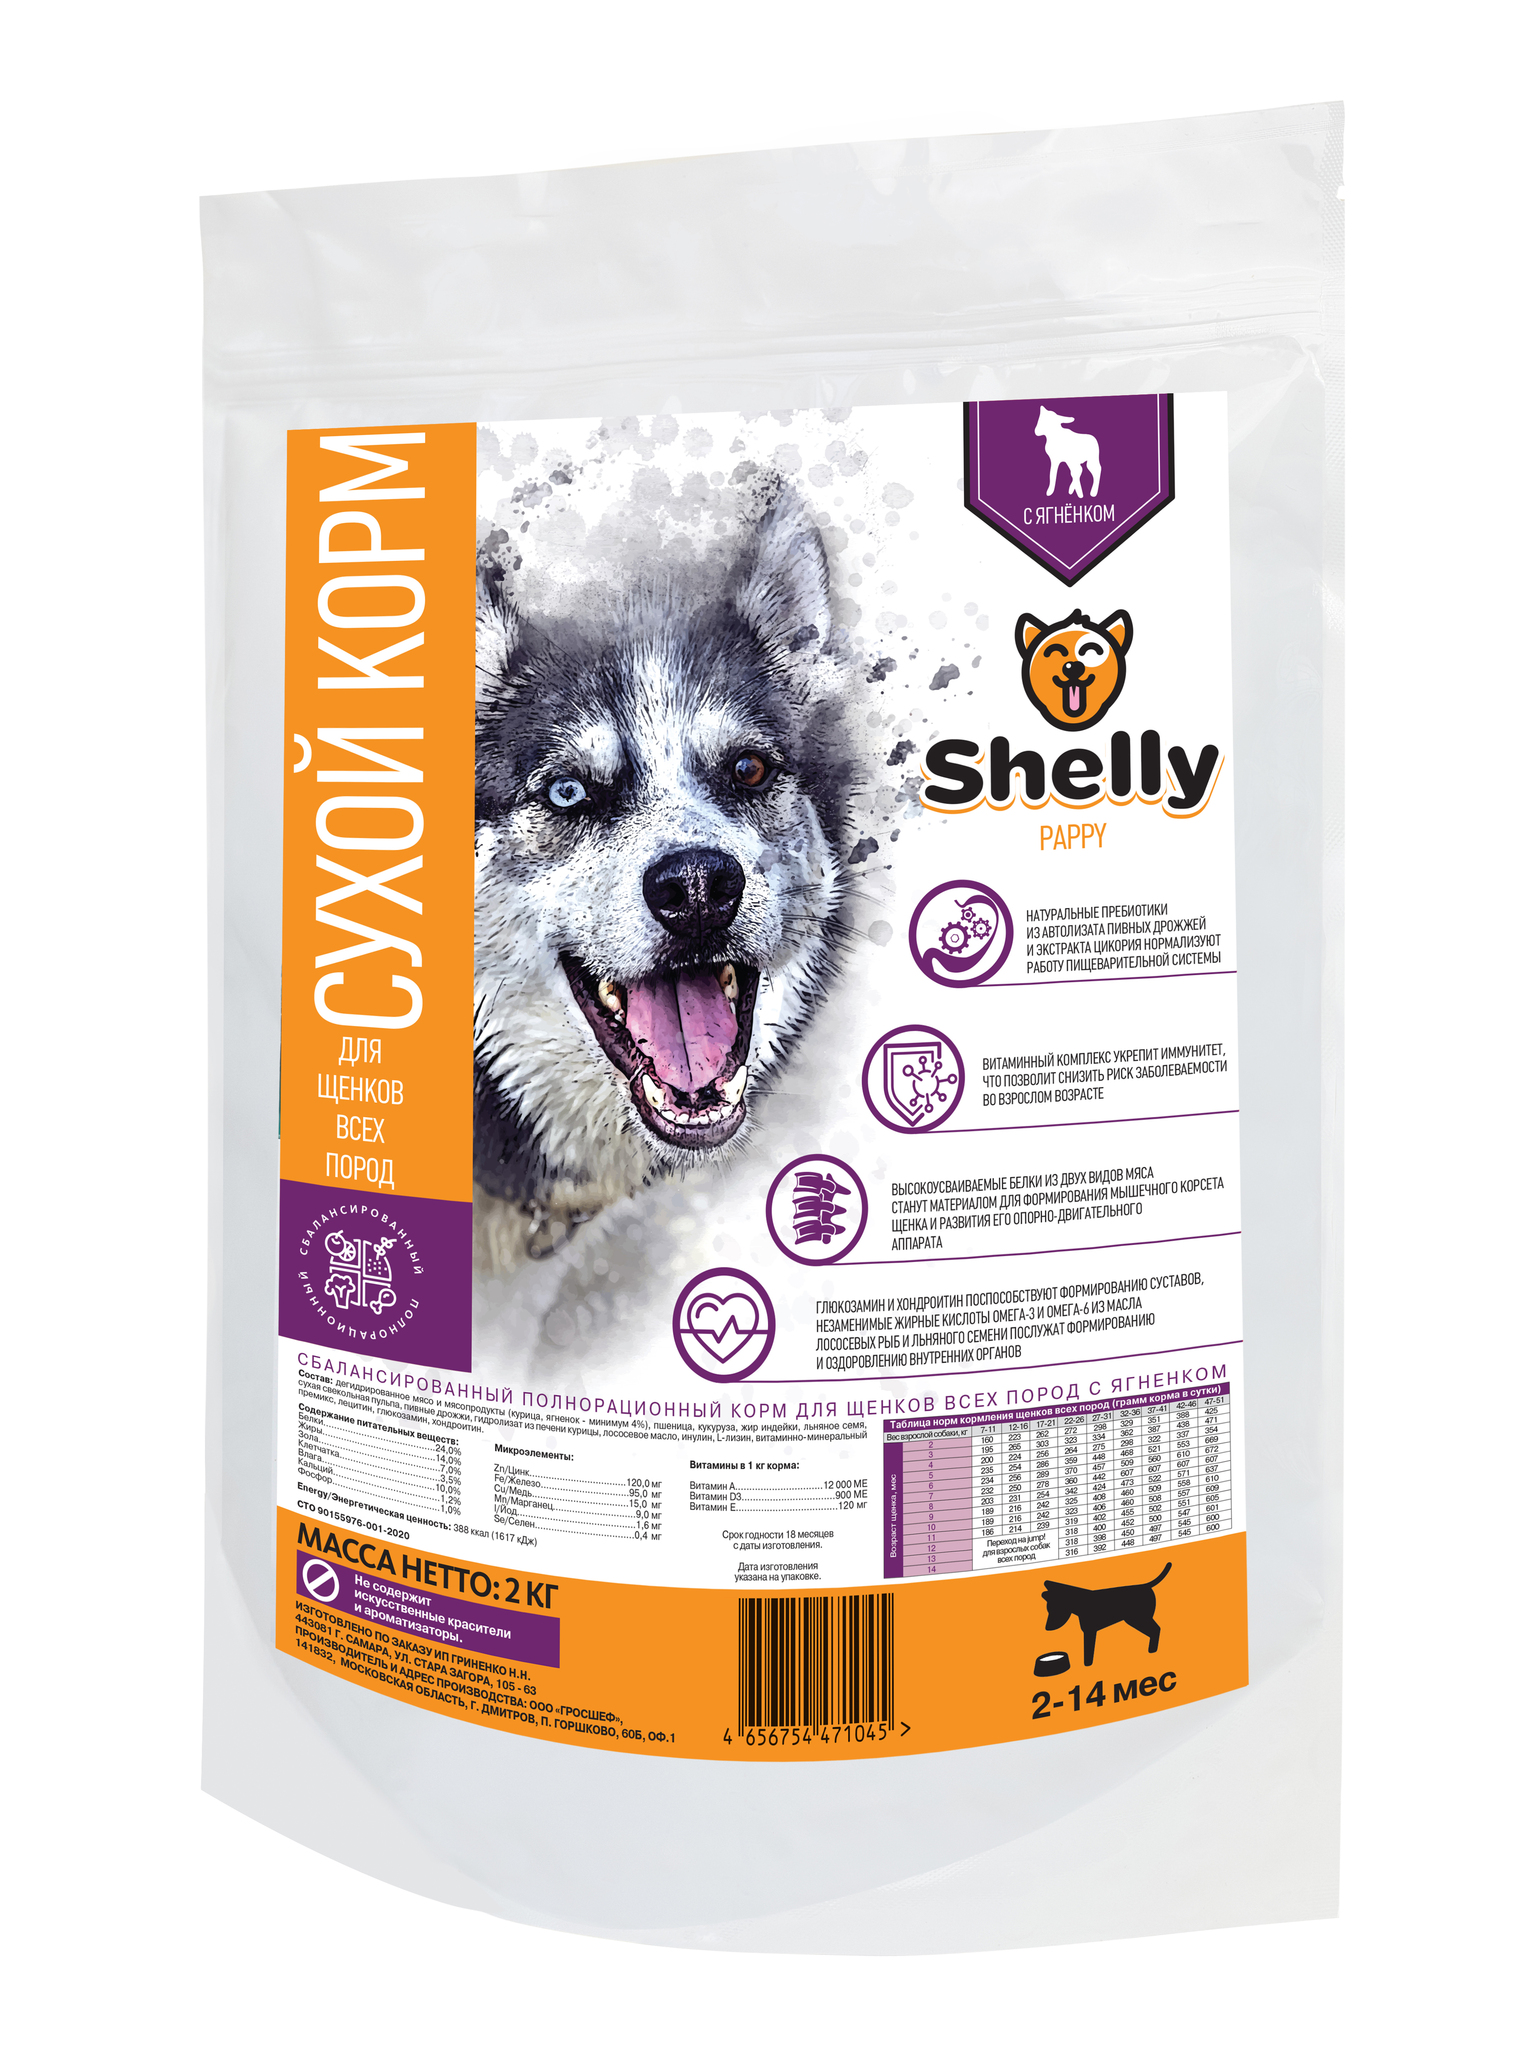 Каталог Сухой корм для щенков собак всех пород, Shelly, с ягненком 24-12-21002451_1.jpg